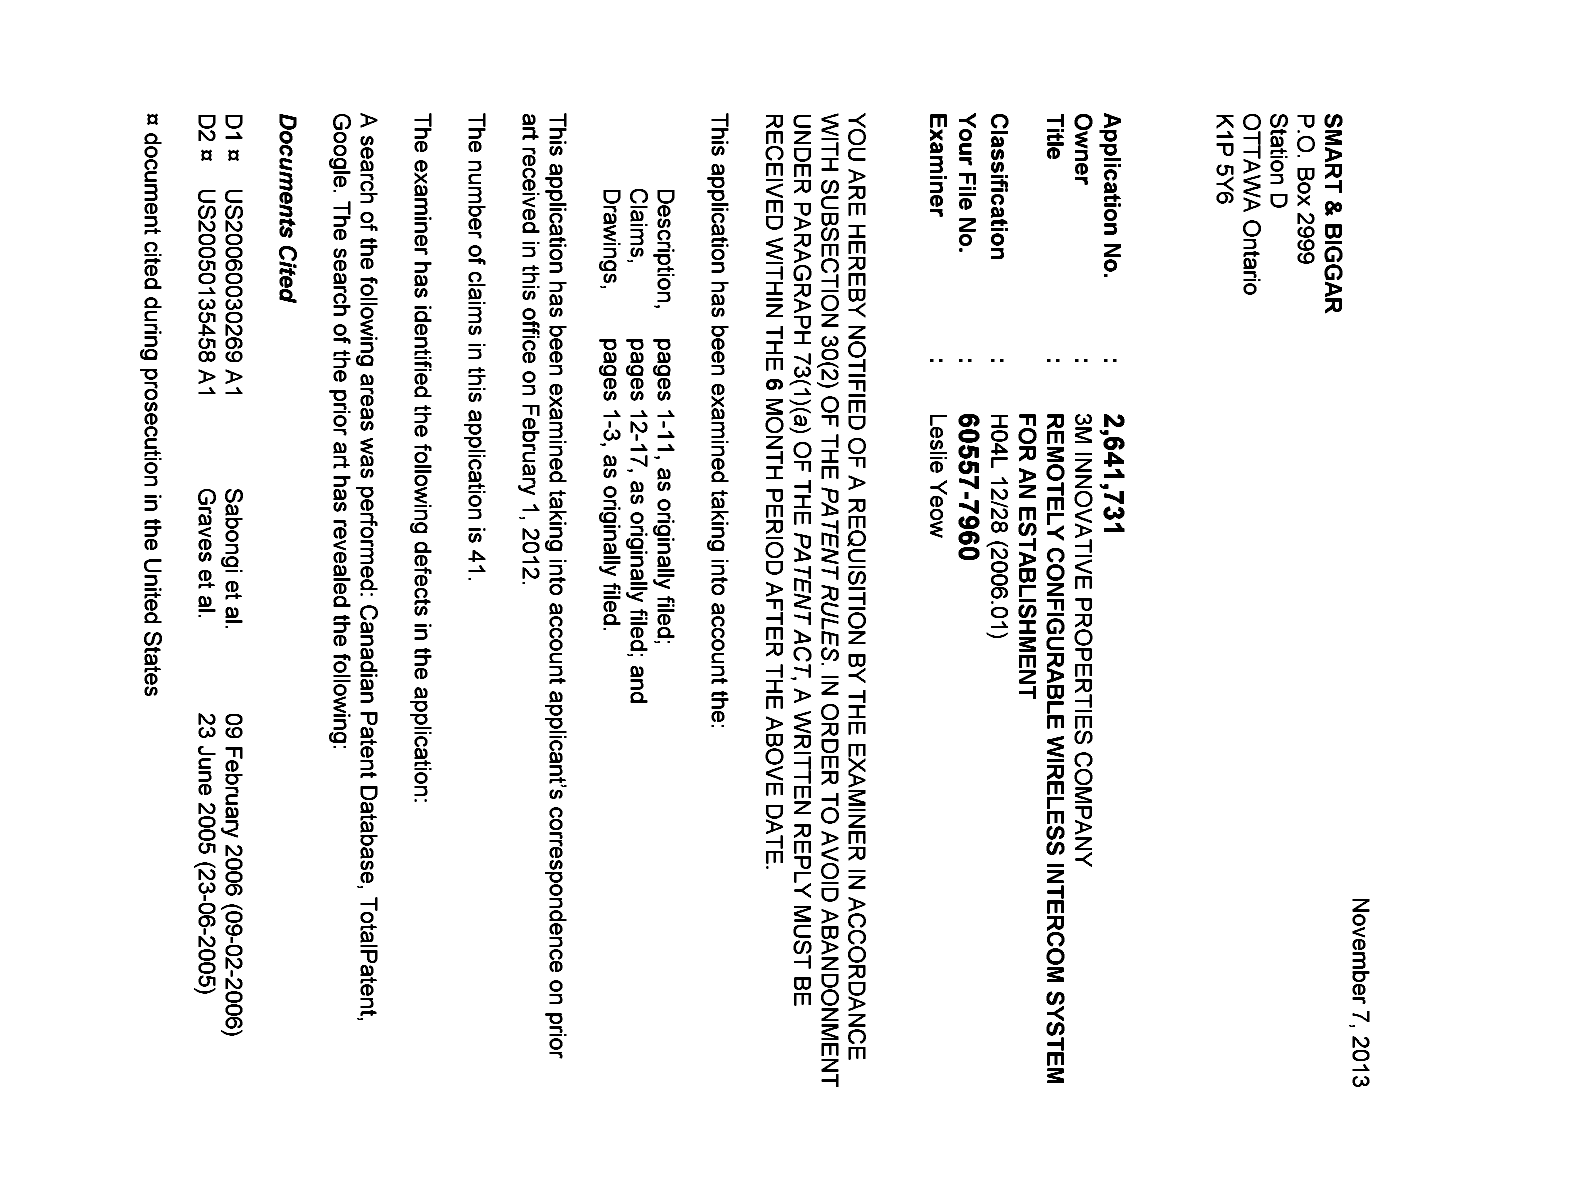 Canadian Patent Document 2641731. Prosecution-Amendment 20131107. Image 1 of 3